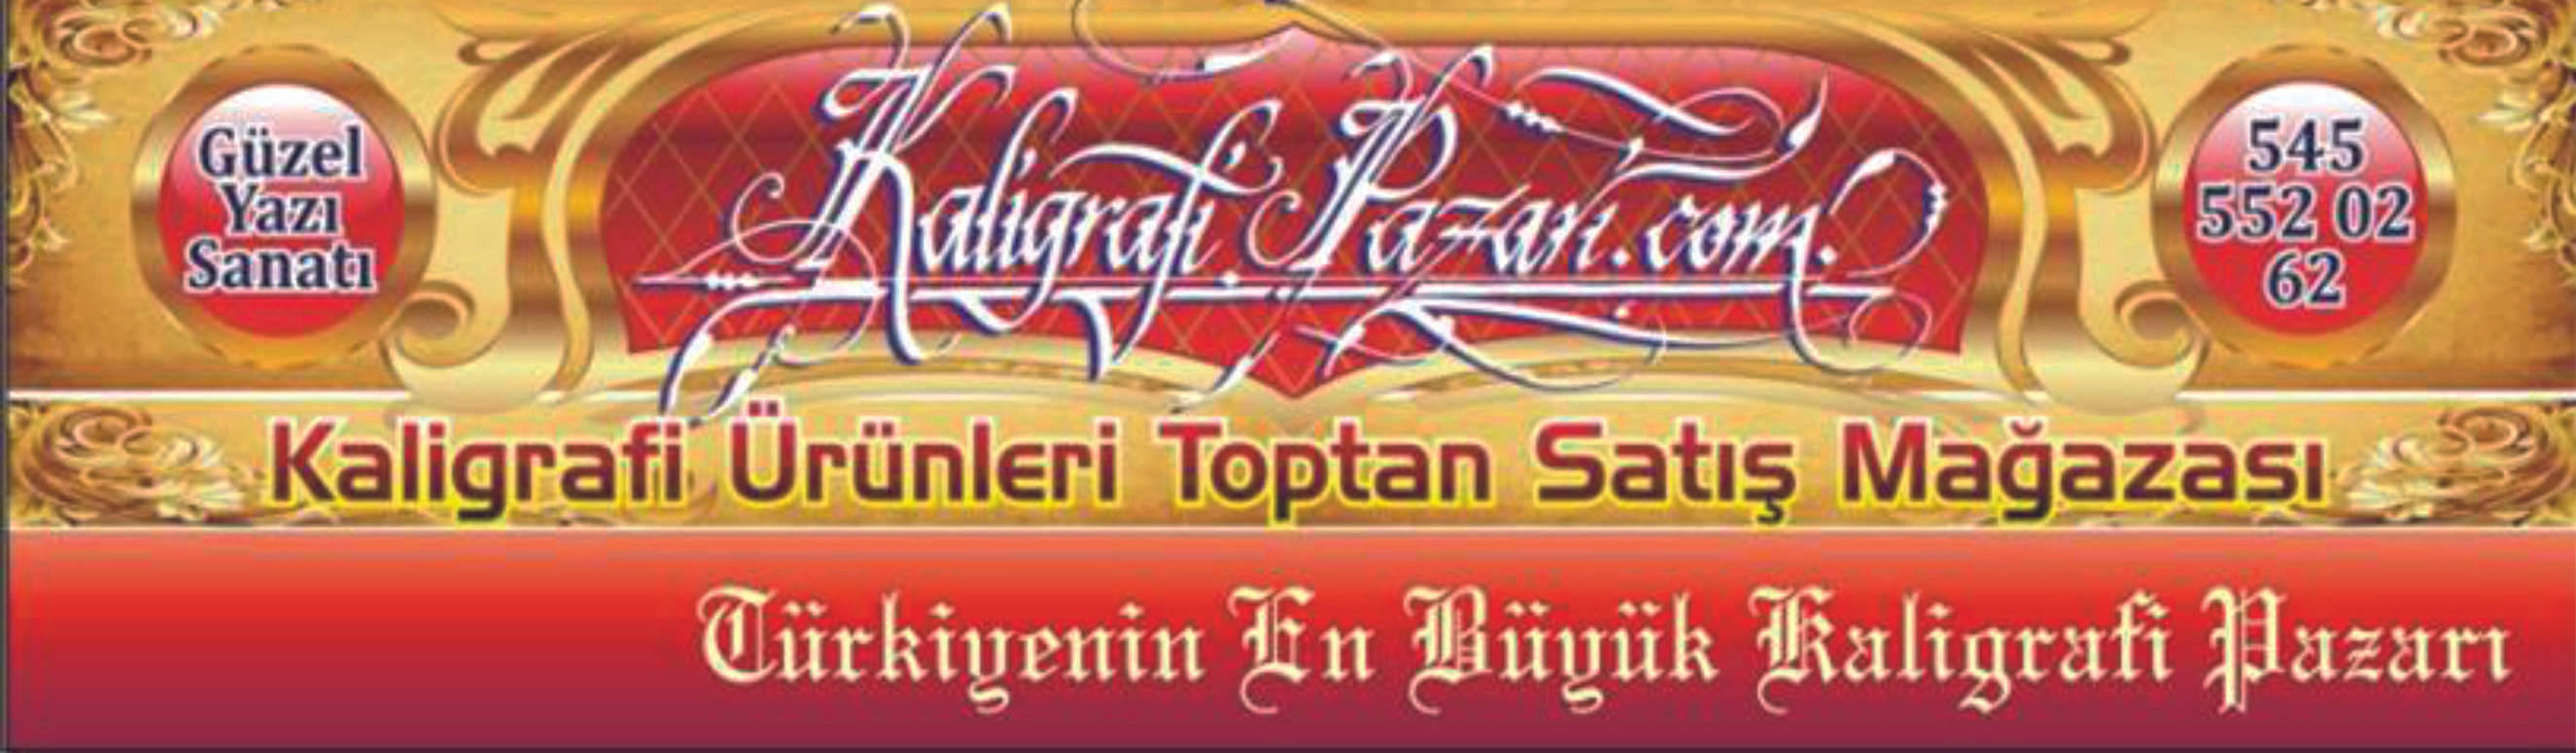 www.kaligrafipazari.com